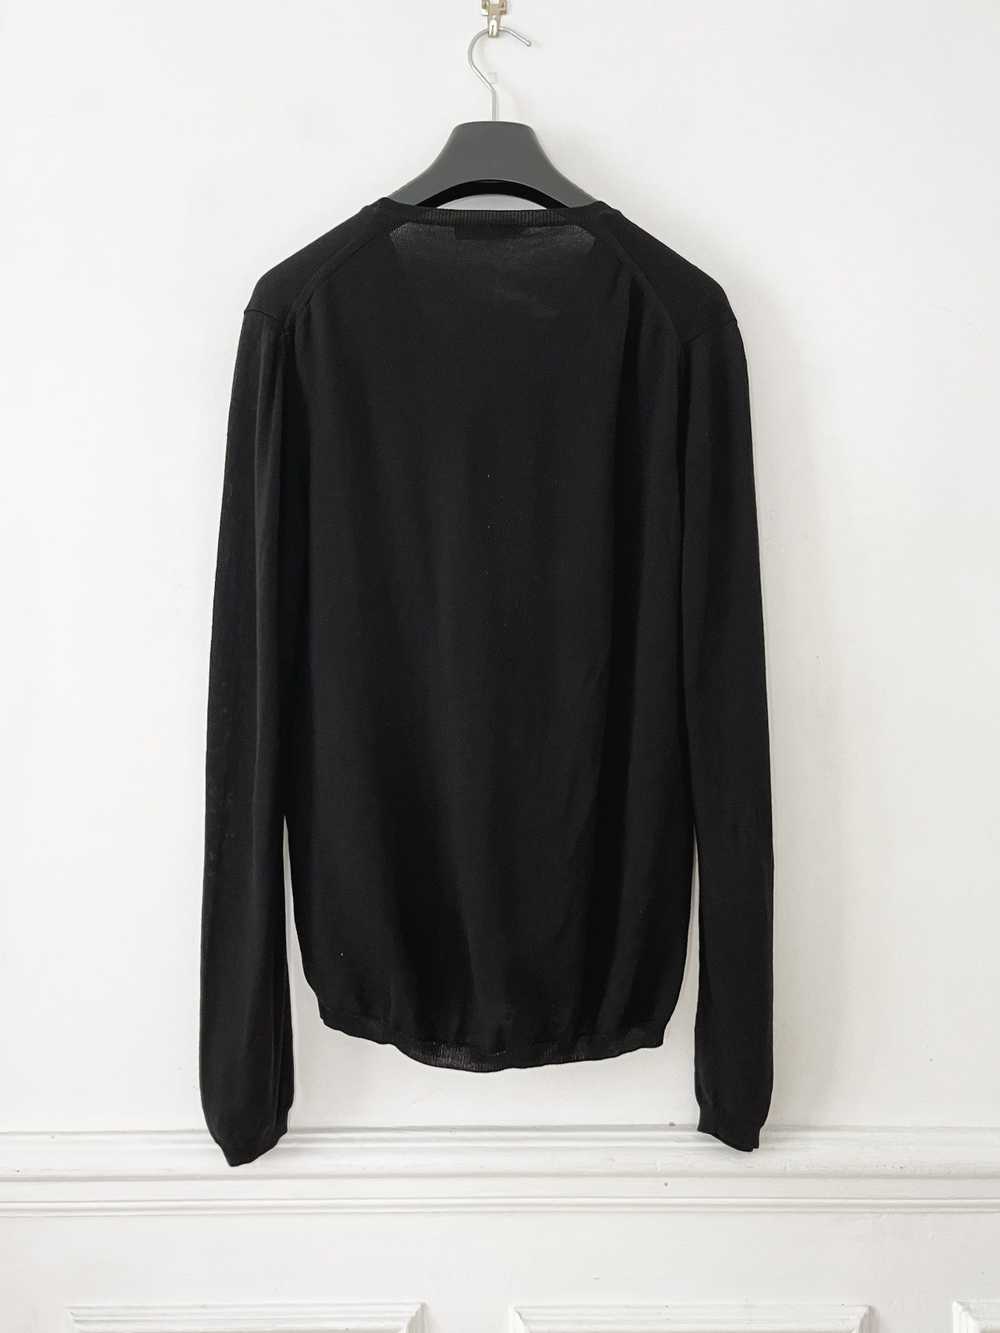 Prada Prada mens black wool knit v neck sweater - image 2